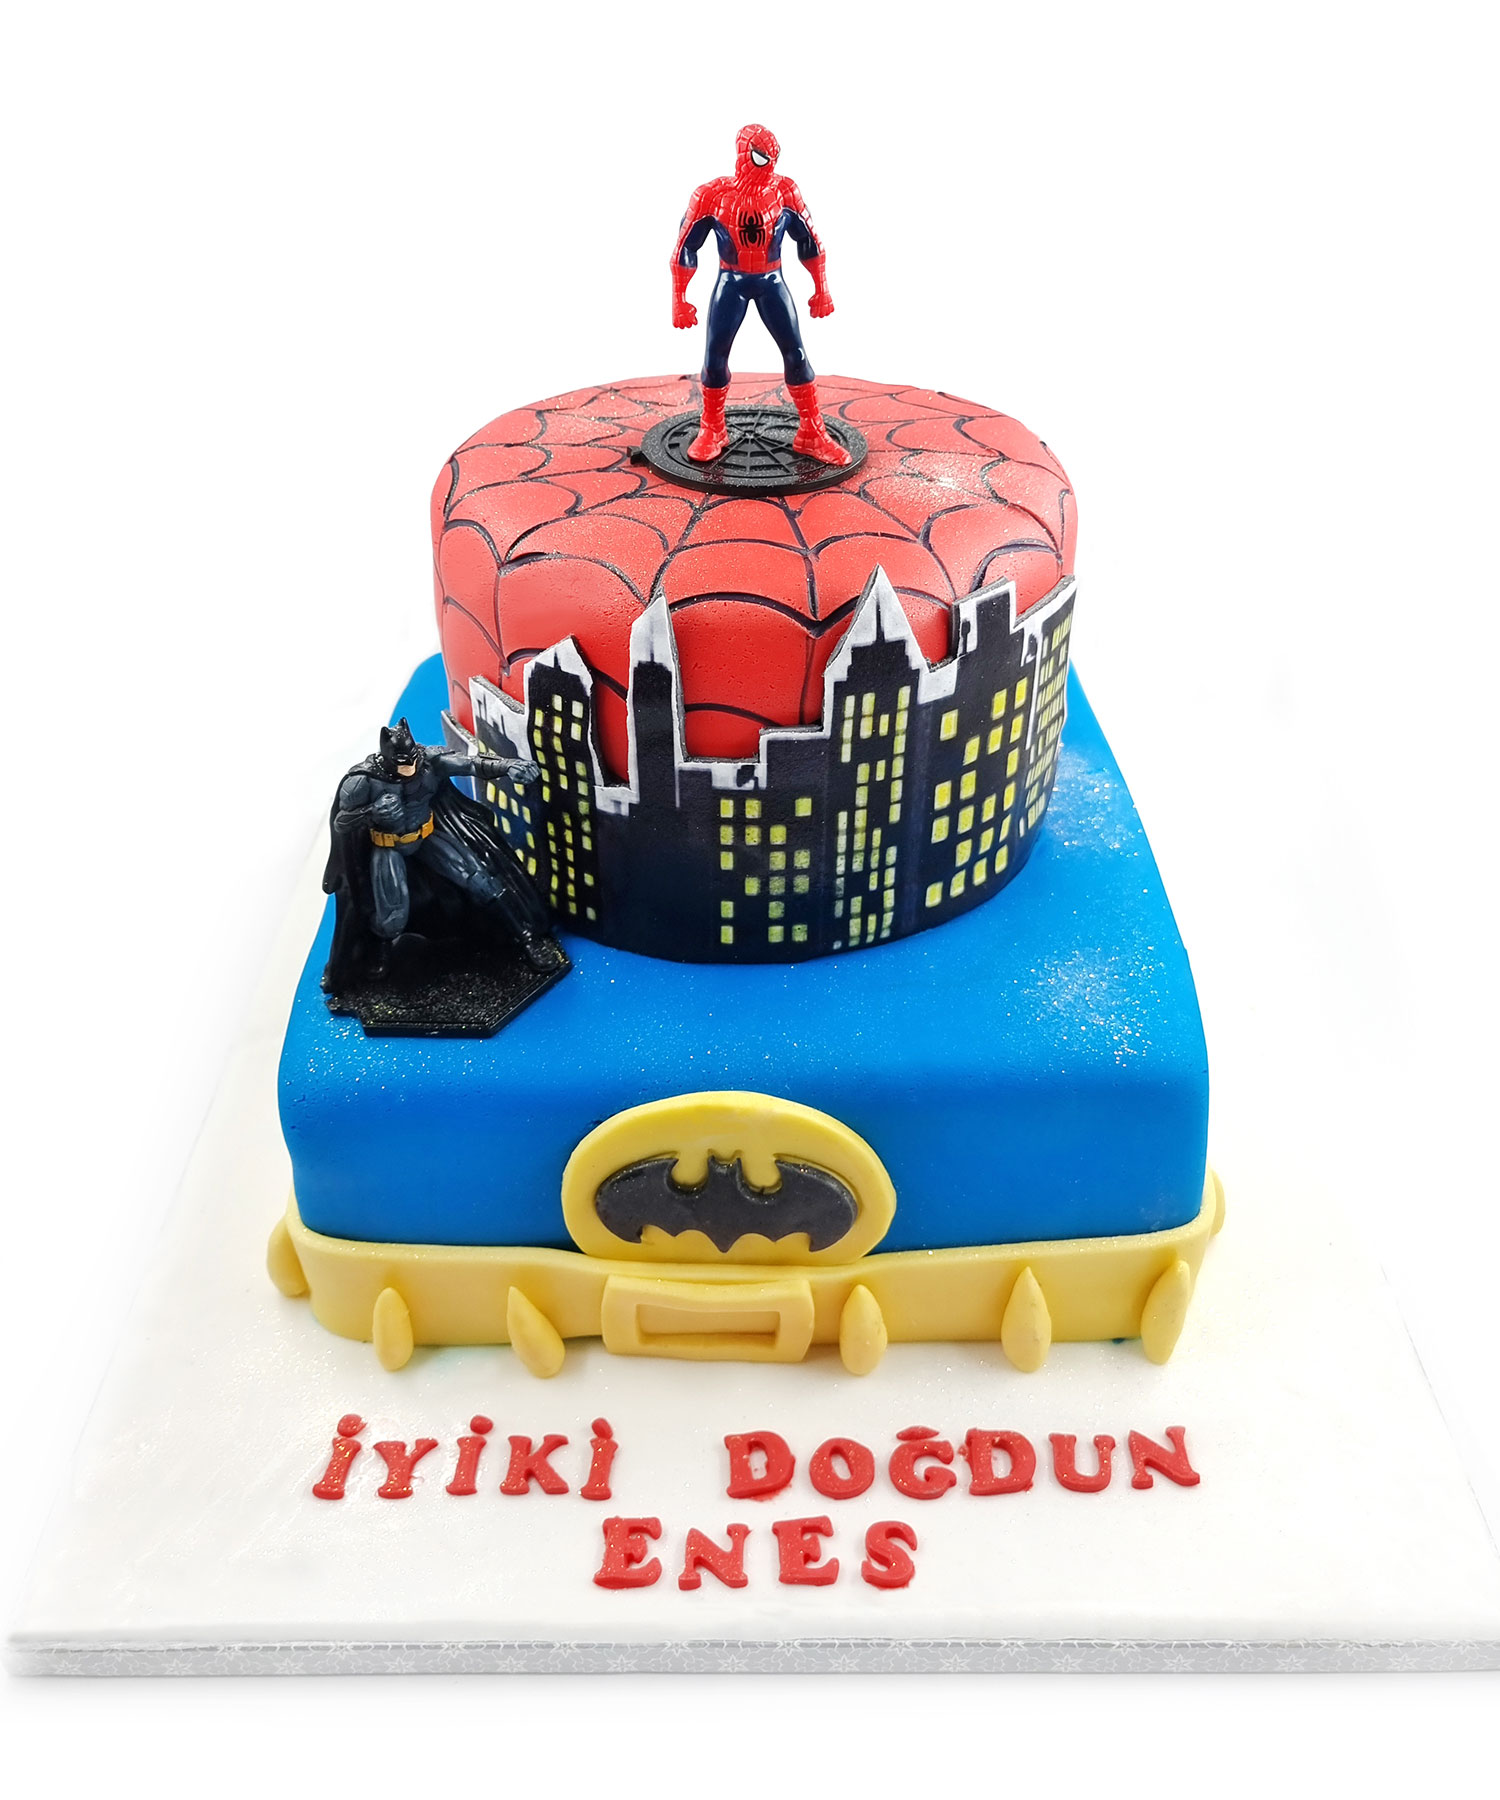 Superman, Spider-Man and Batman Make for One Spectacular Superhero Cake  [pic] - Global Geek News